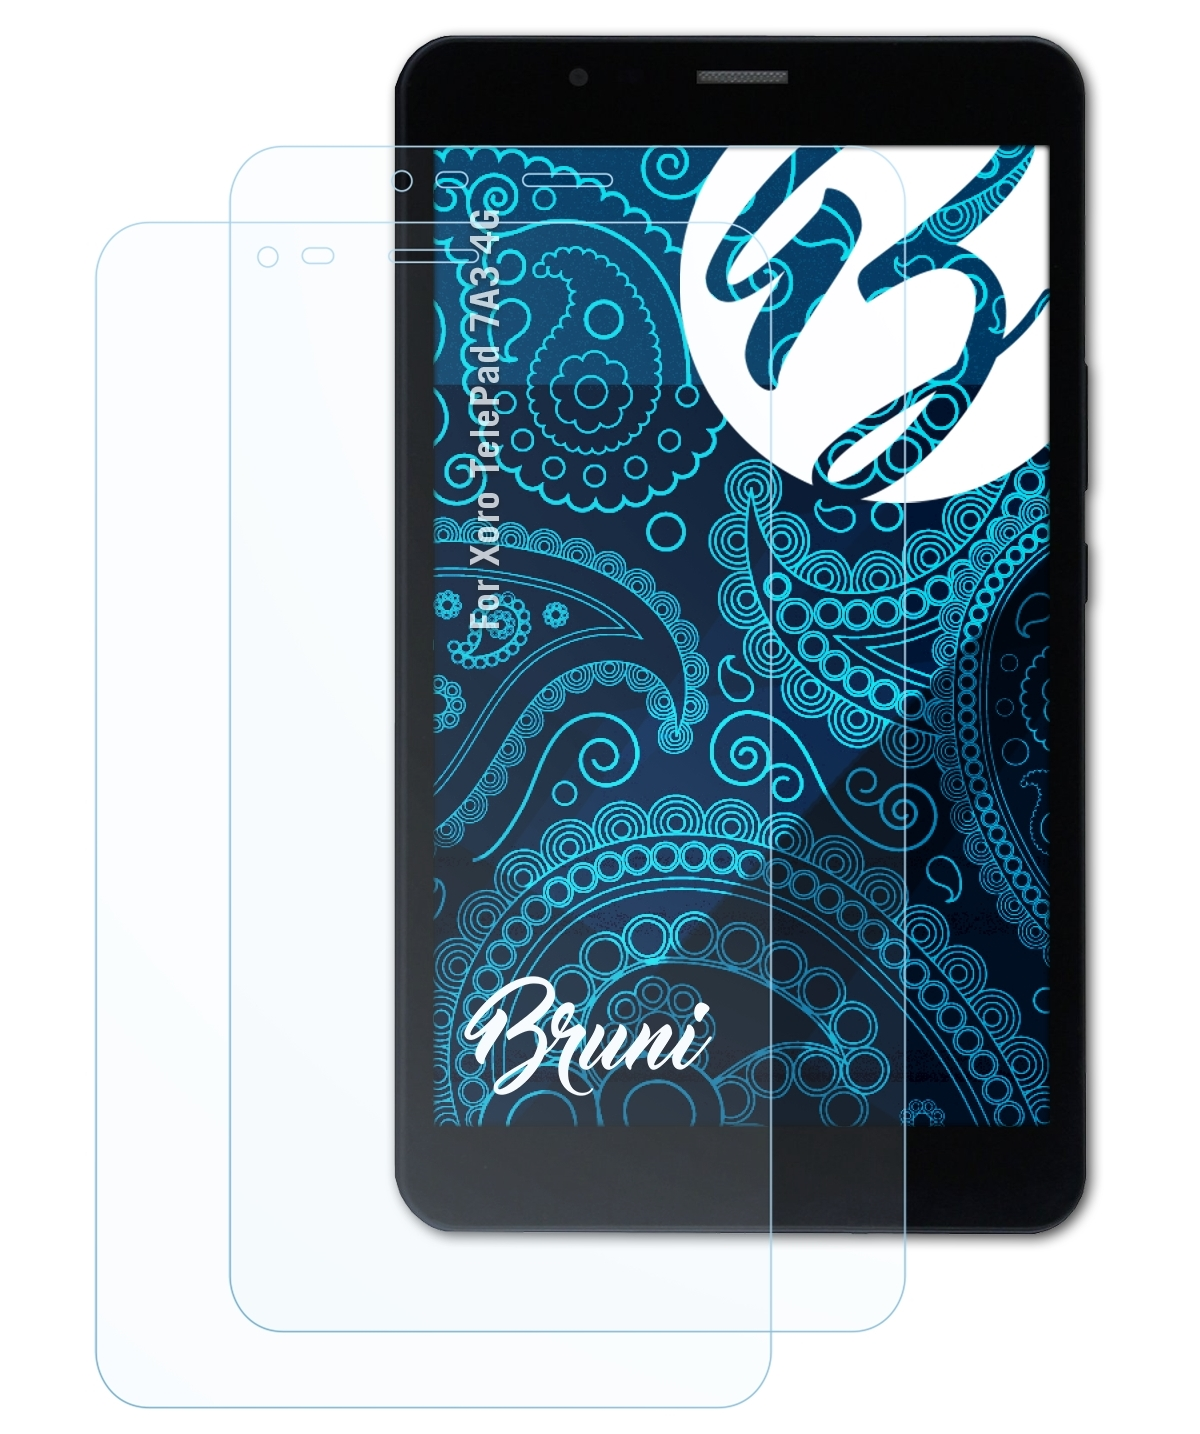 BRUNI 2x Basics-Clear Schutzfolie(für TelePad 4G) 7A3 Xoro